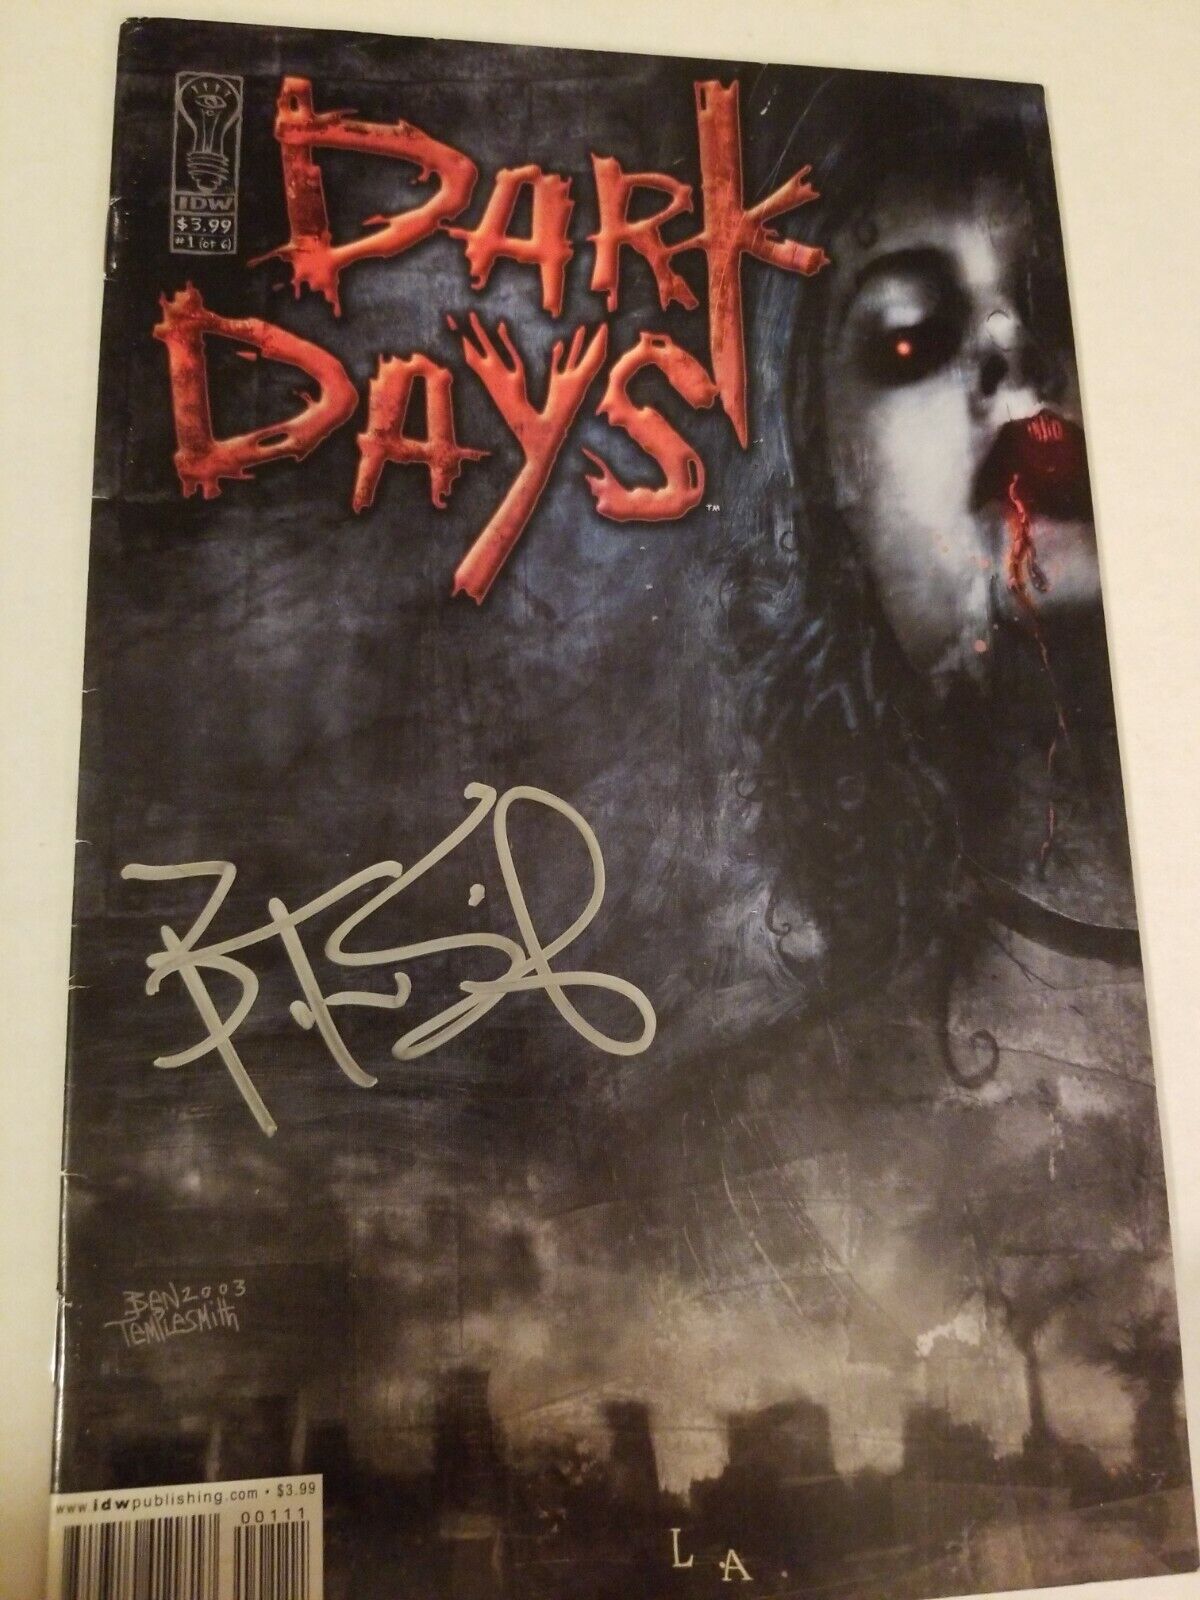 DARK DAYS #1 IDW horRor vampire sexy 2003 SIGNED by artist Ben Templesmith bad